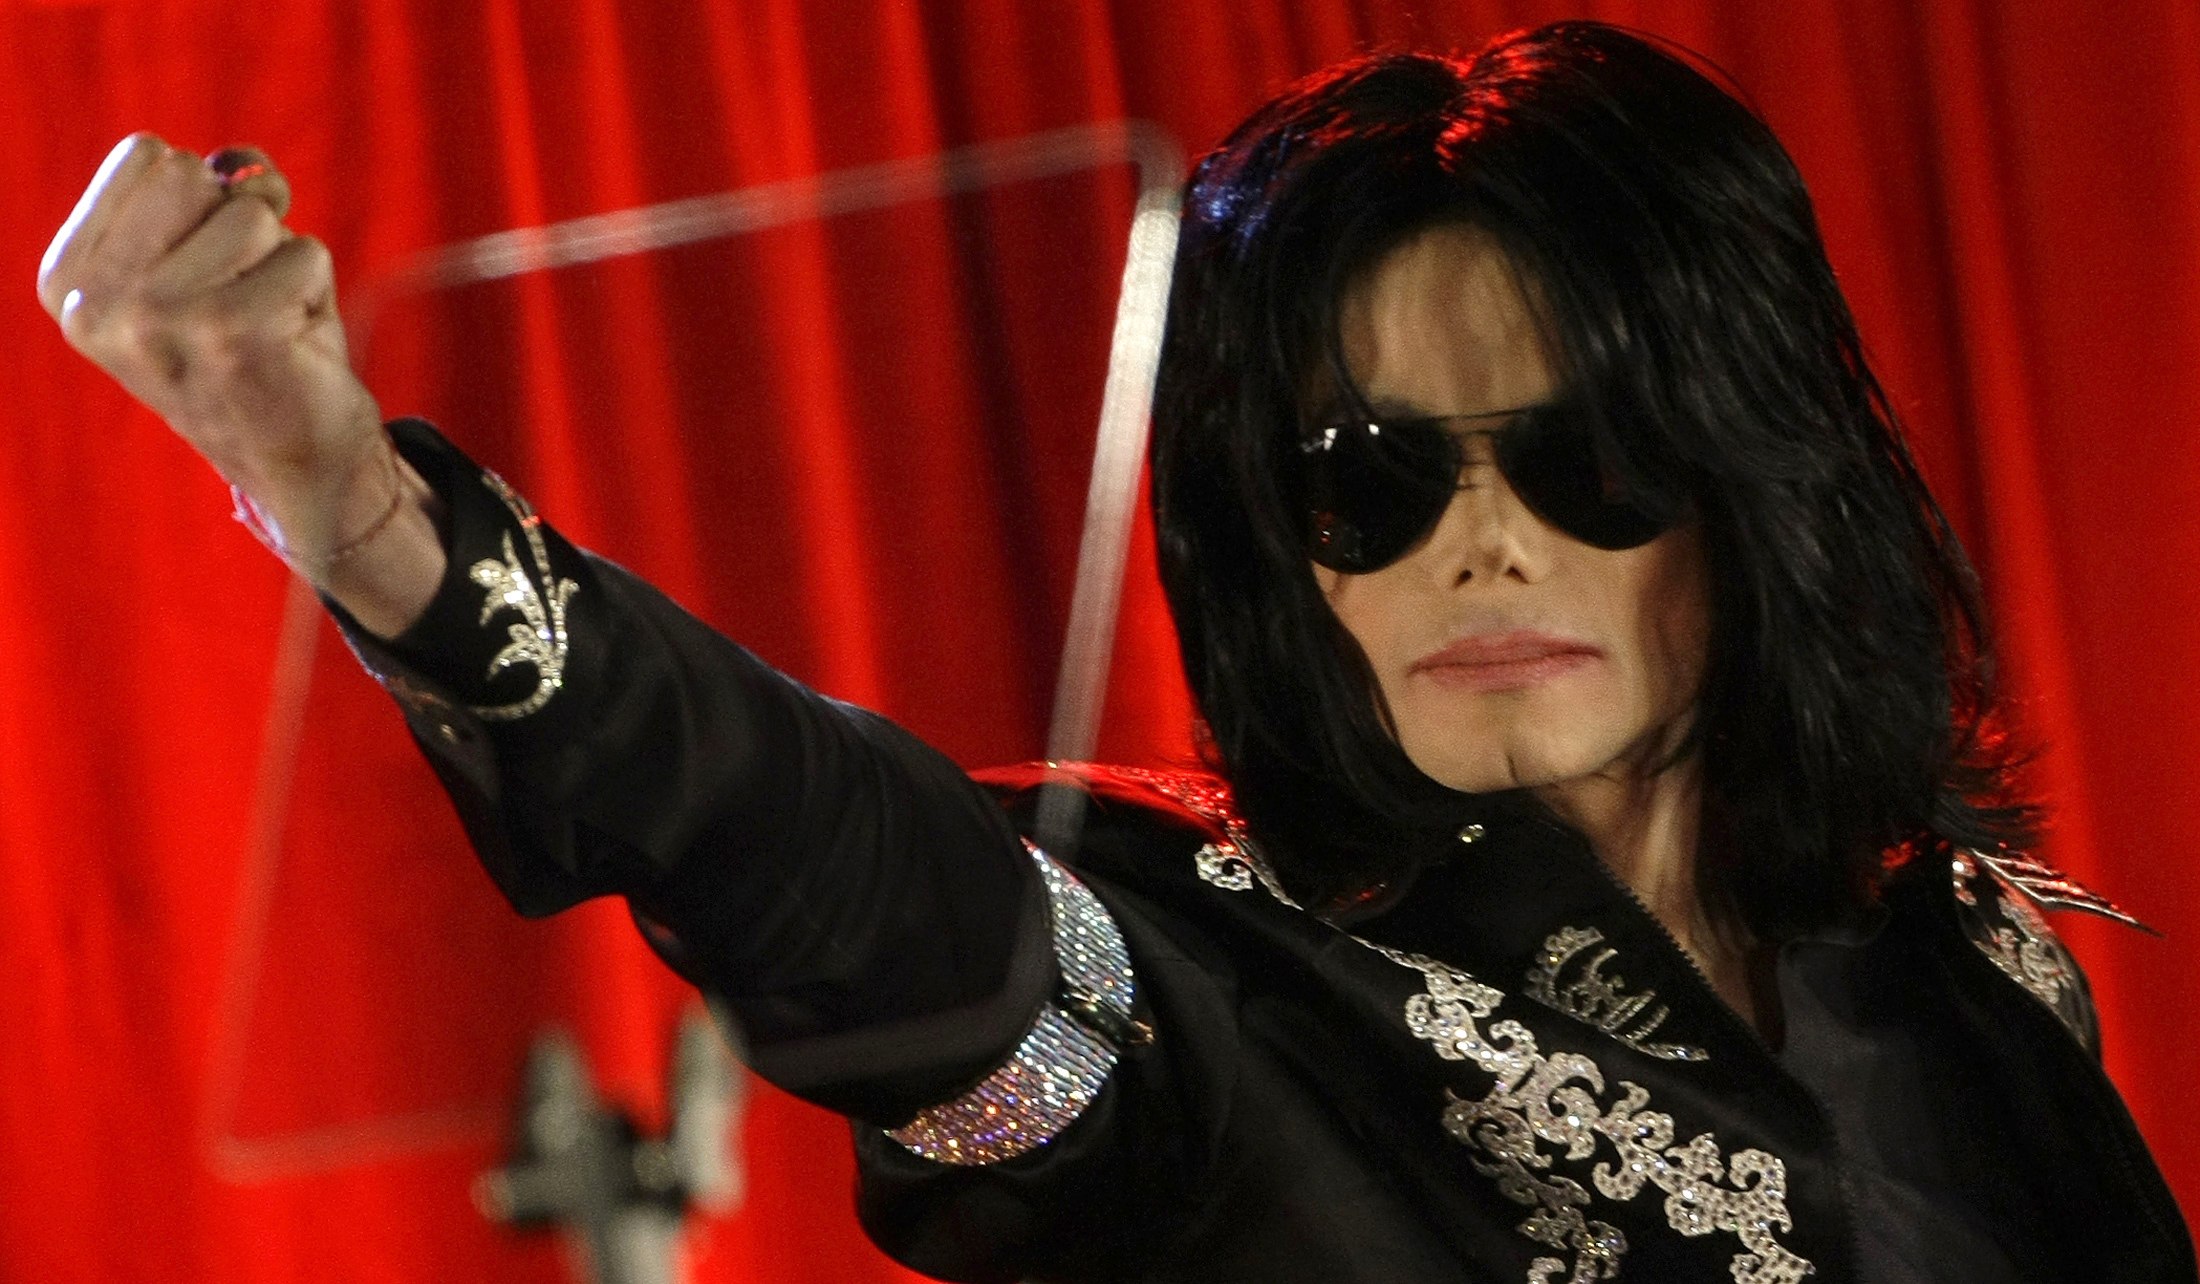 Michael Jackson 1990